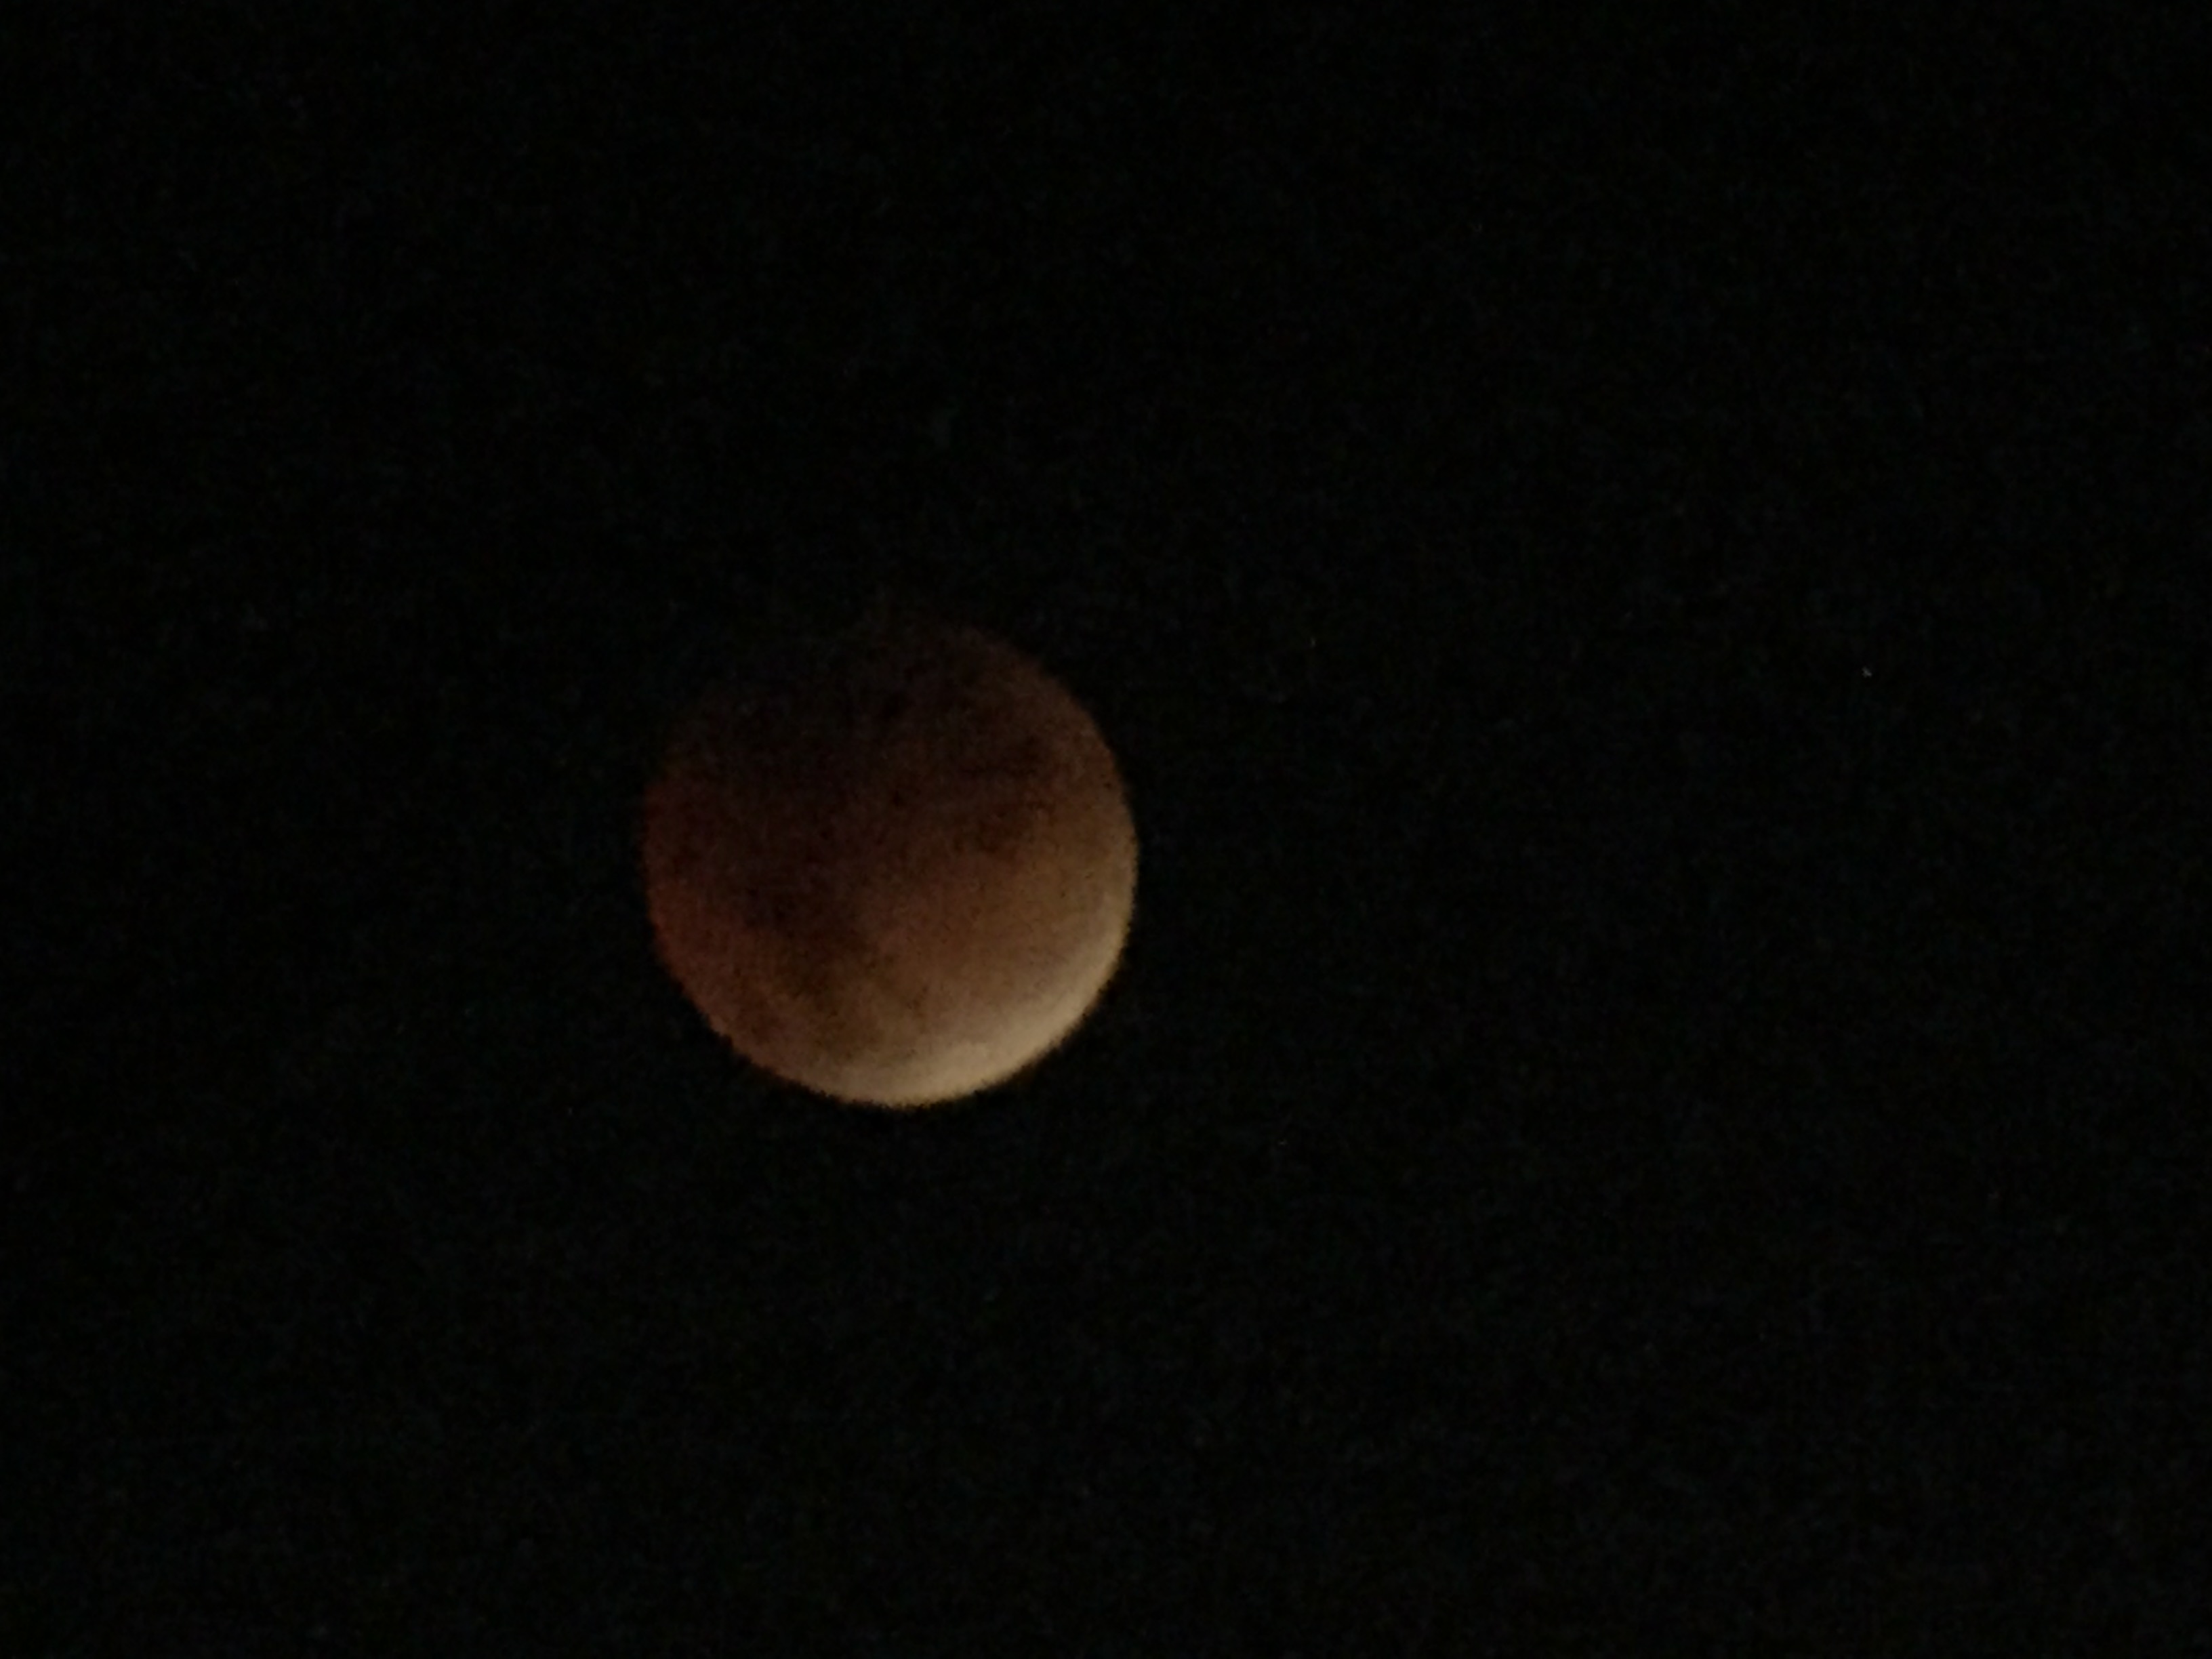 Lunar eclipse of the Super Blood Moon